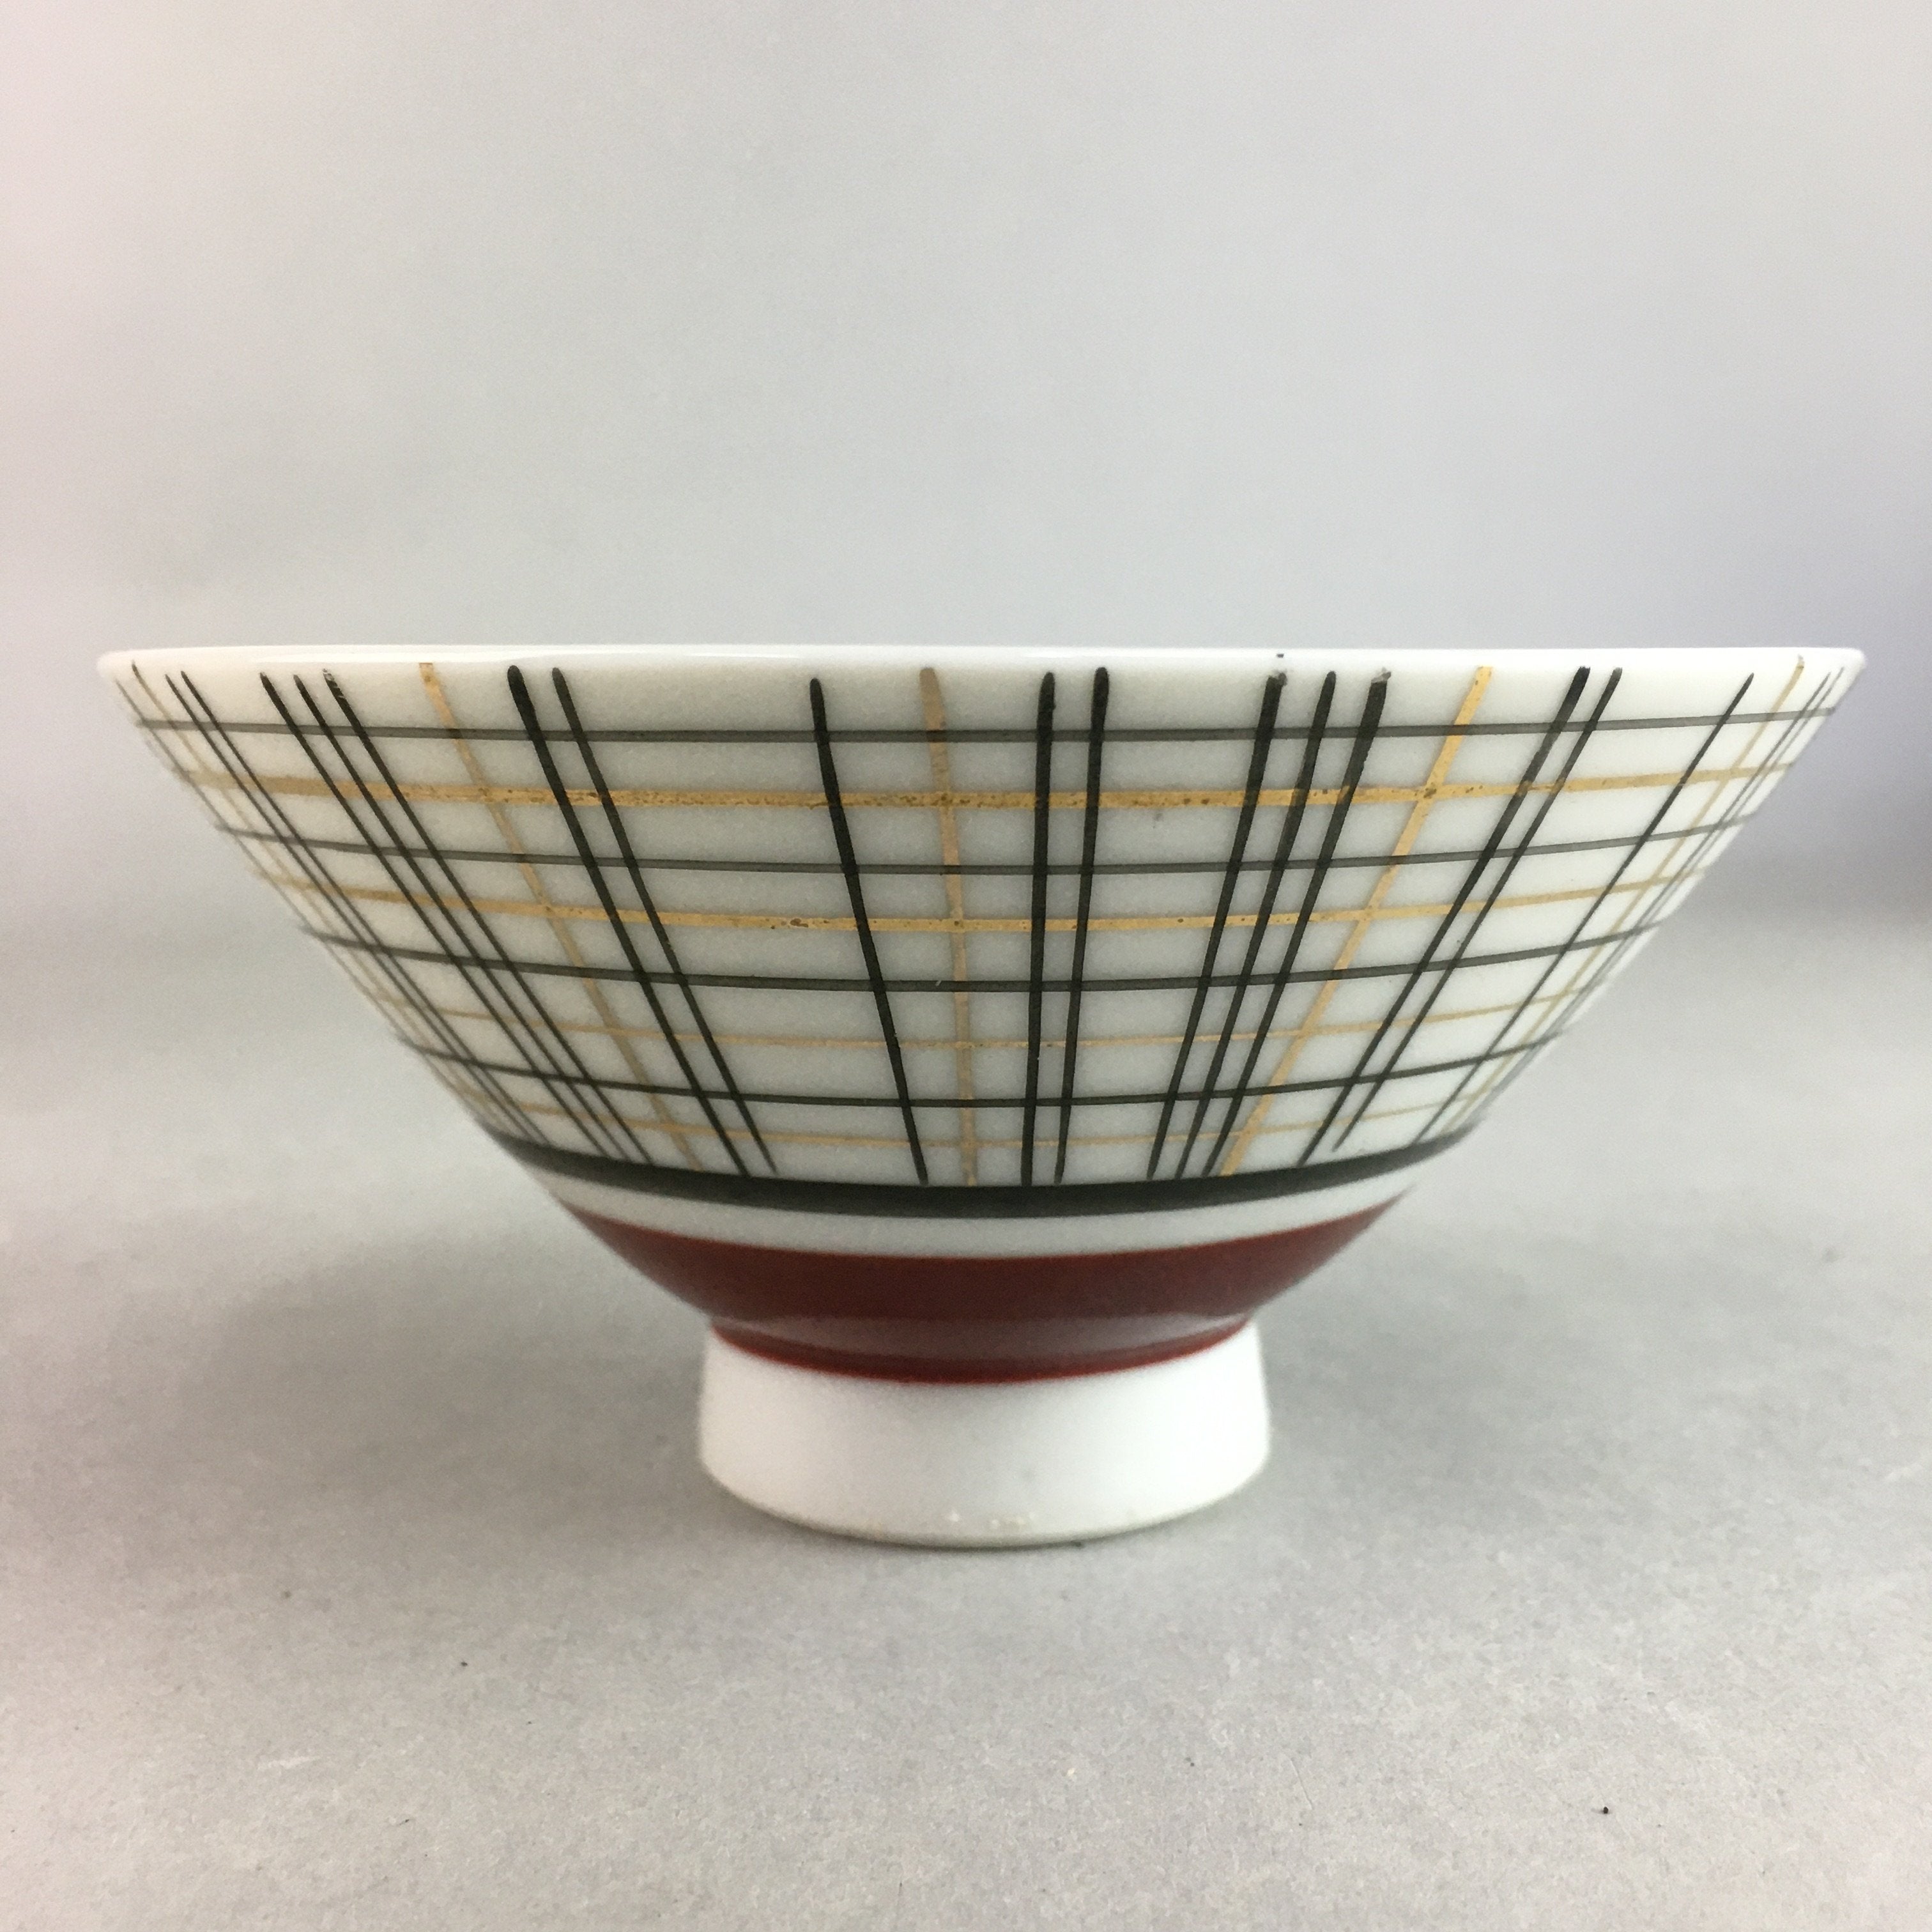 Japanese Porcelain Rice Bowl Vtg Chawan Plaid Black Gold Red PP271